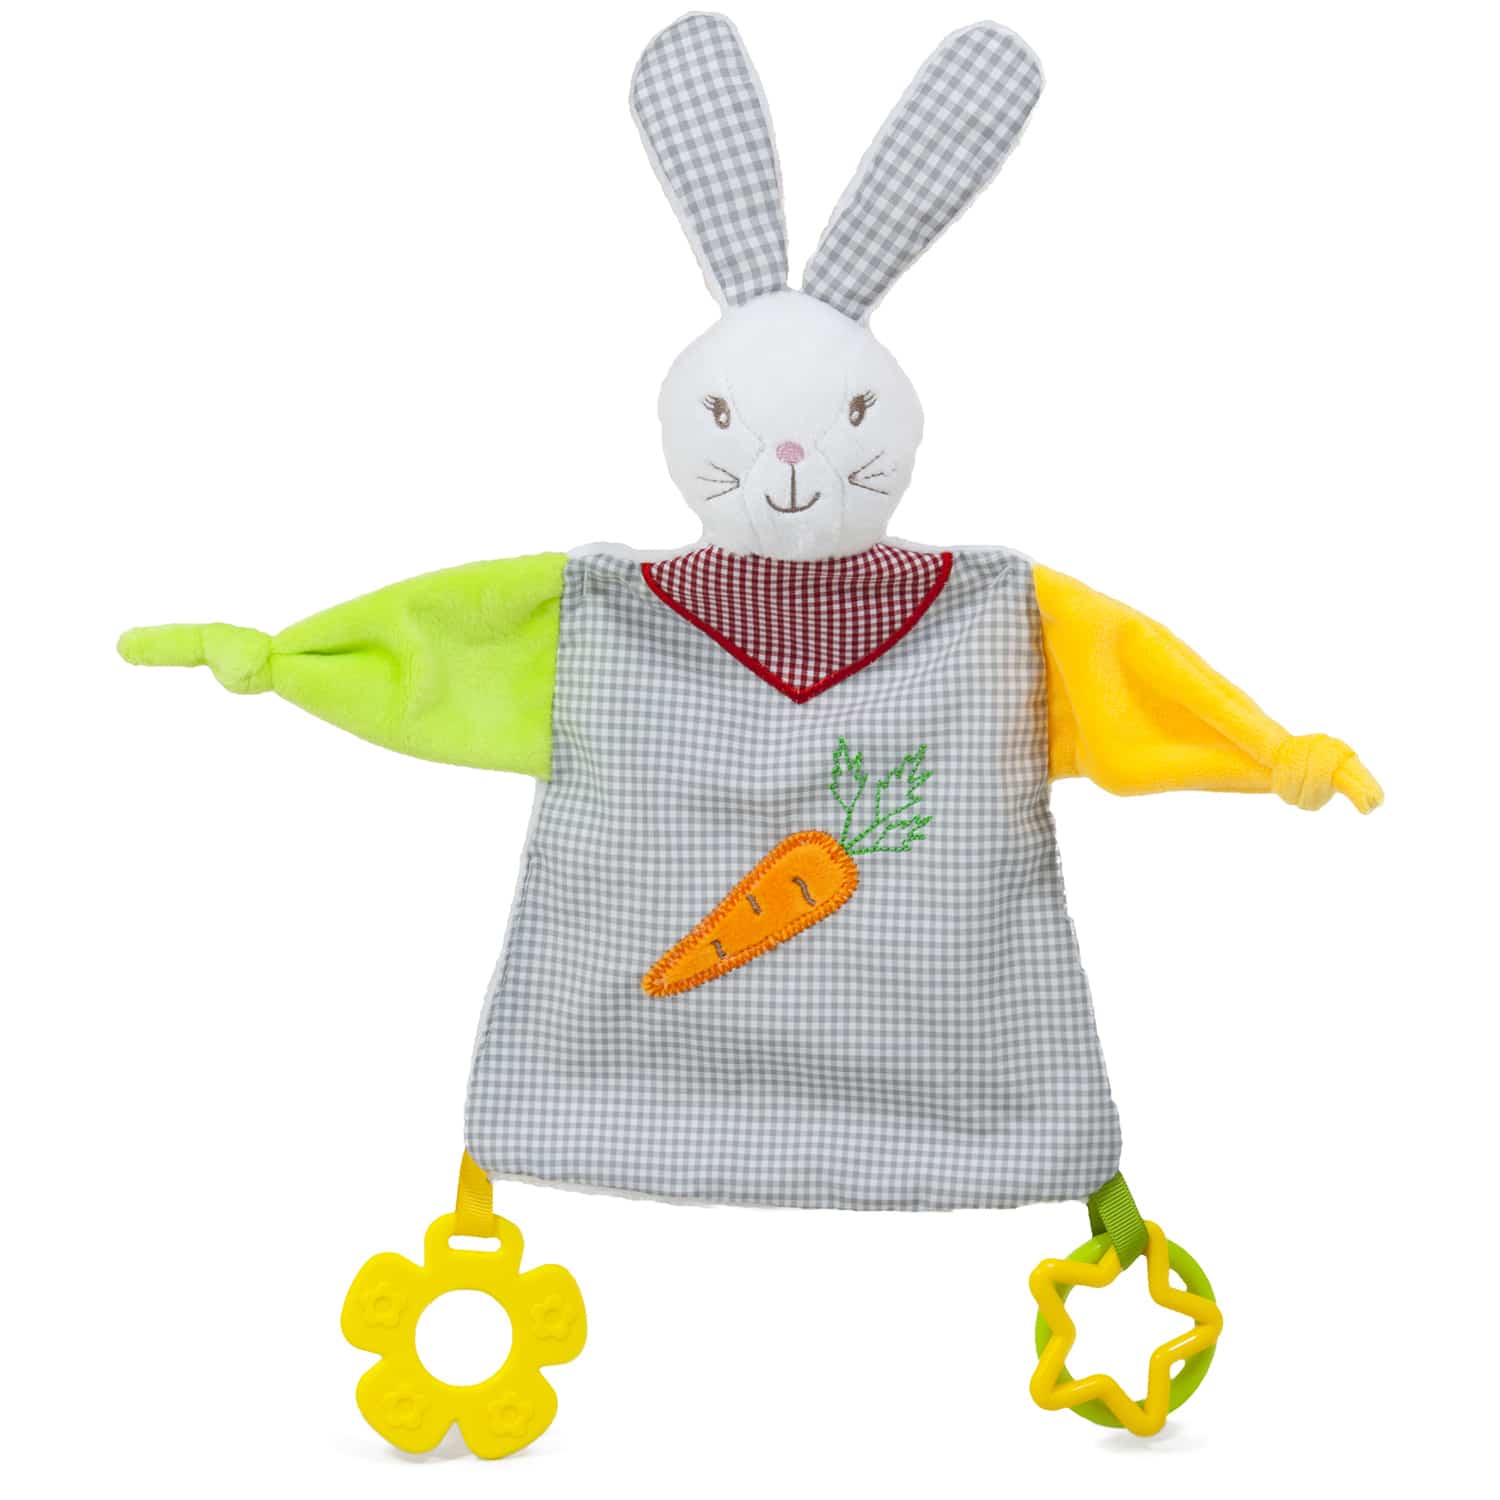 Soft toy for cuddling - Bunny